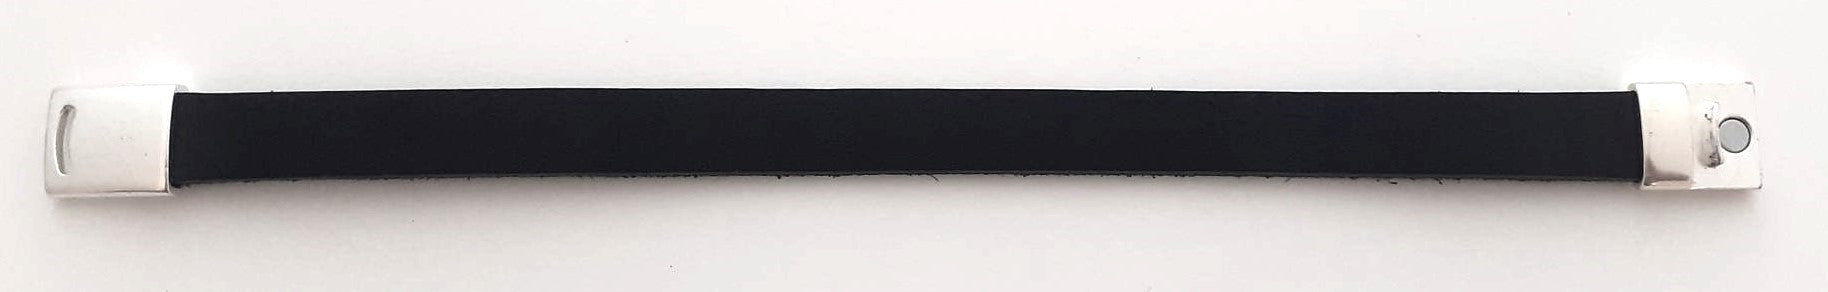 Armband 13mm mit Magnetverschluss - 2723